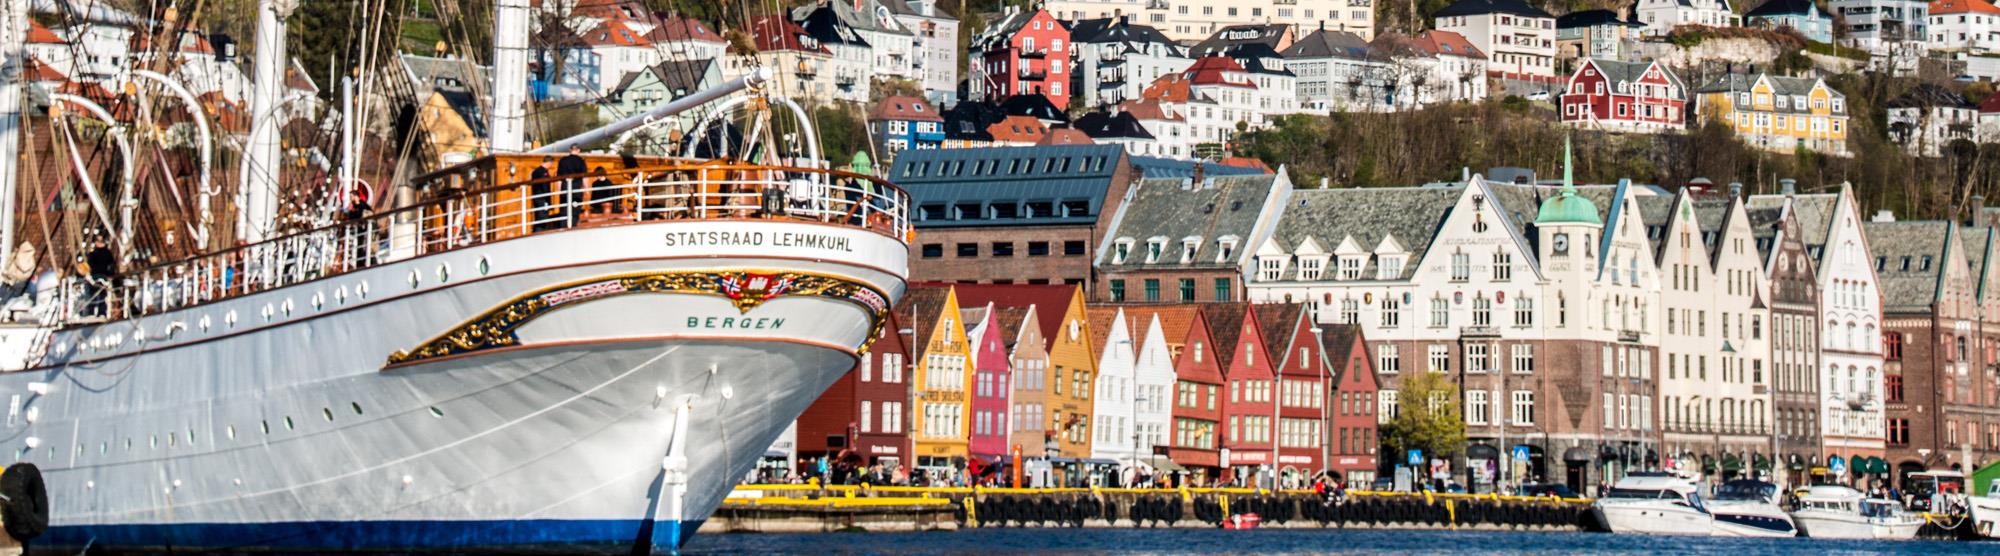 Find your DMC in Bergen